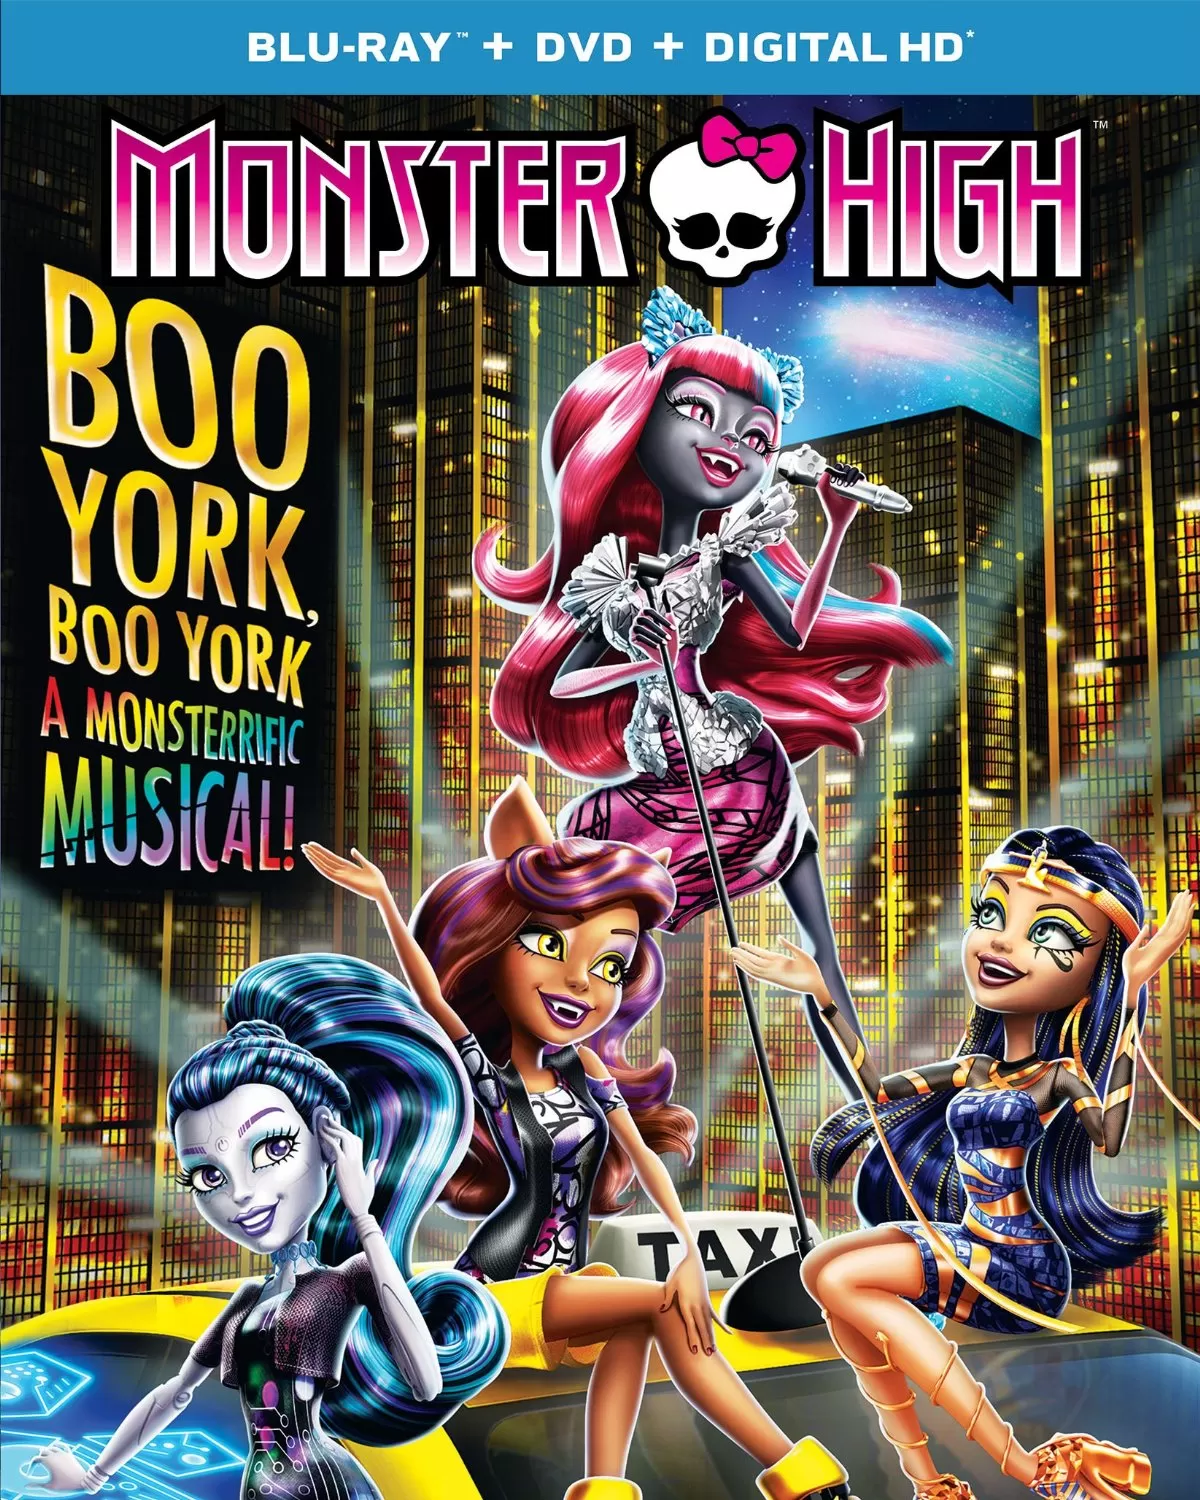 Monster High Boo York, Boo York มอนสเตอร์ ไฮ มนต์เพลงเมืองบูยอร์ค